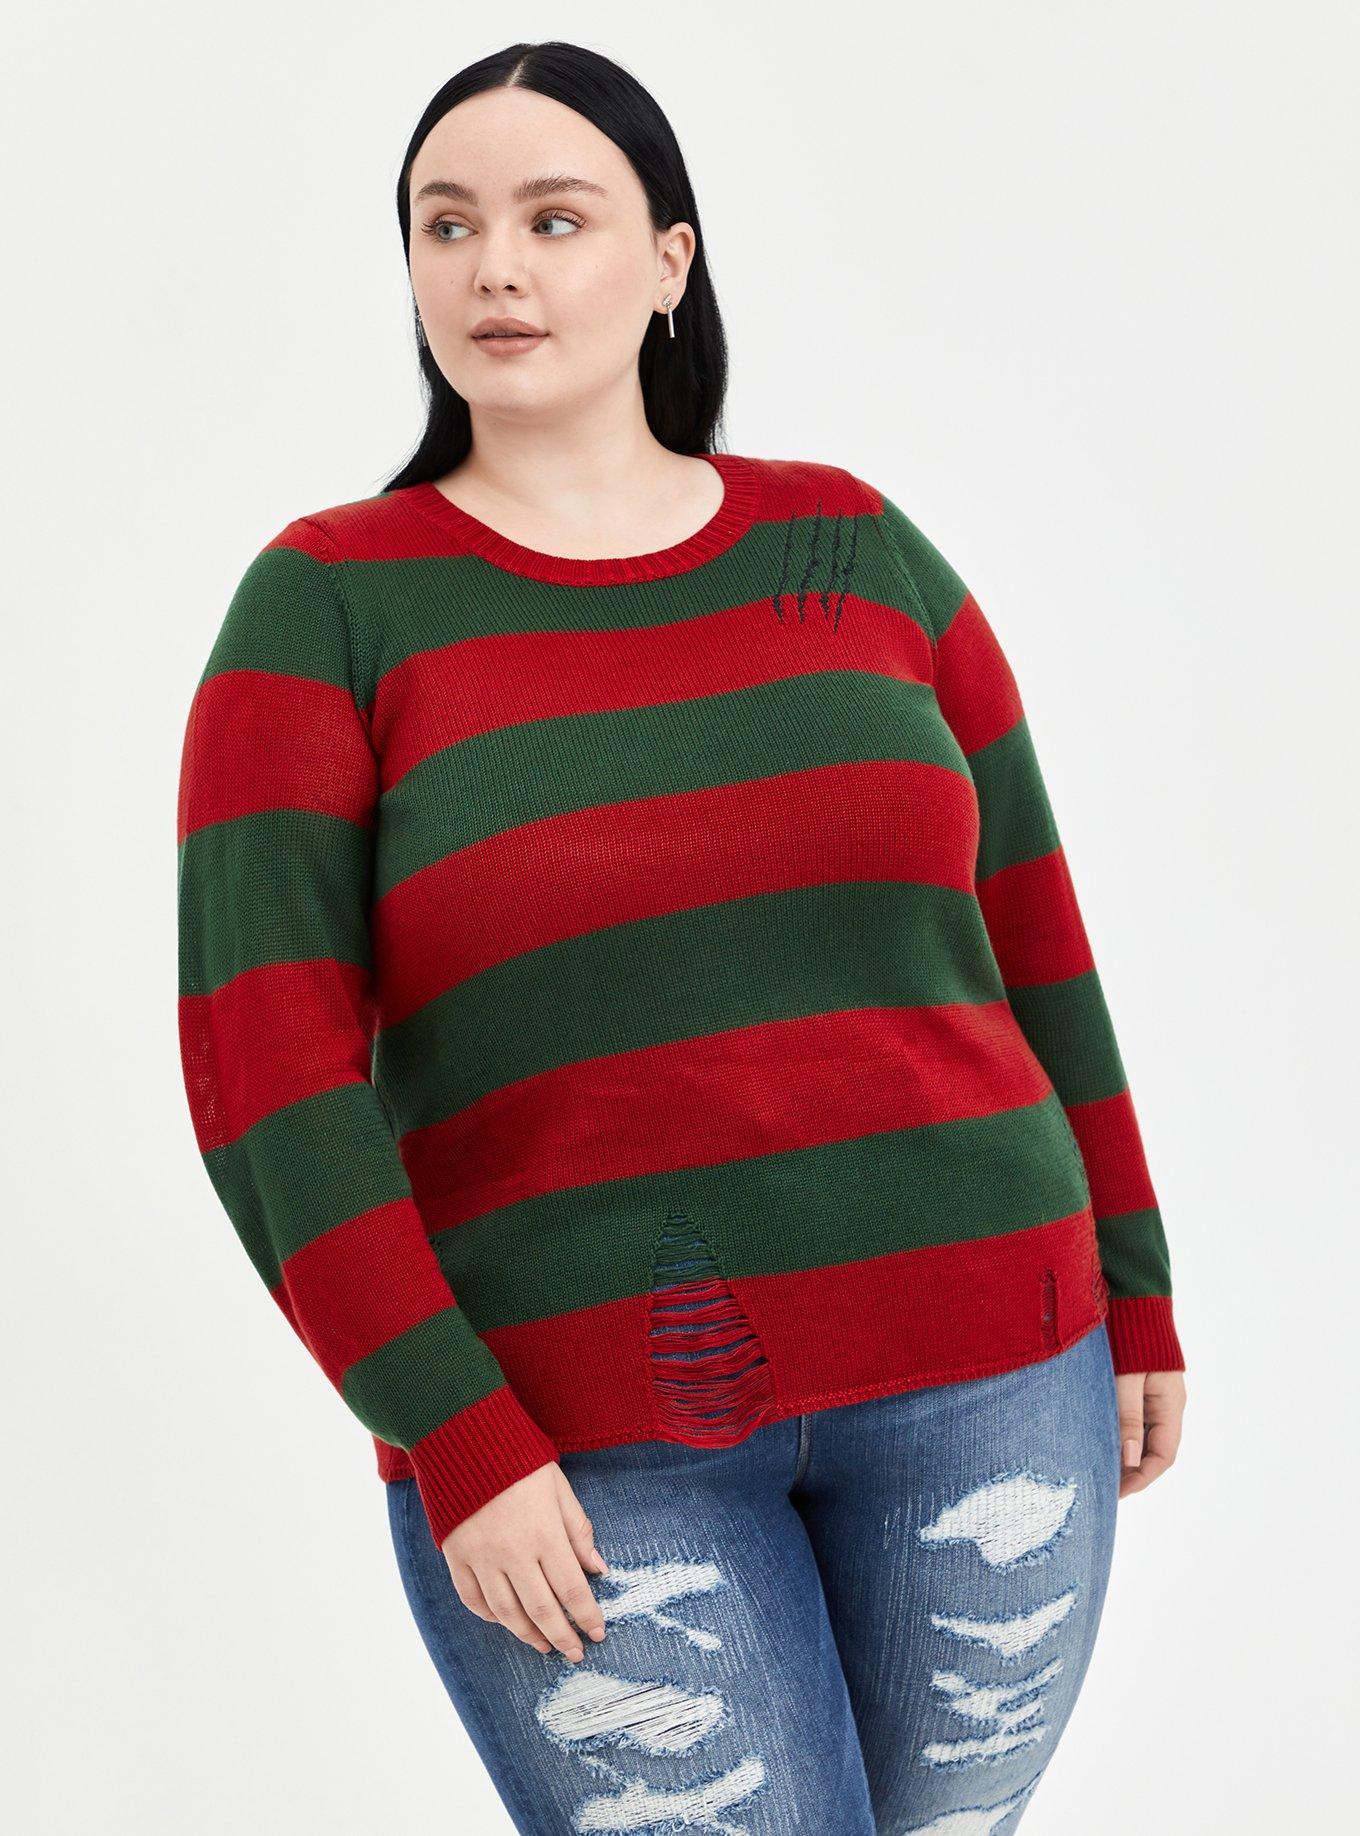 Plus Size - Green On Red Destructed A Bros. - Torrid Nightmare Stripes - Freddy Street Elm Krueger Warner & Sweater